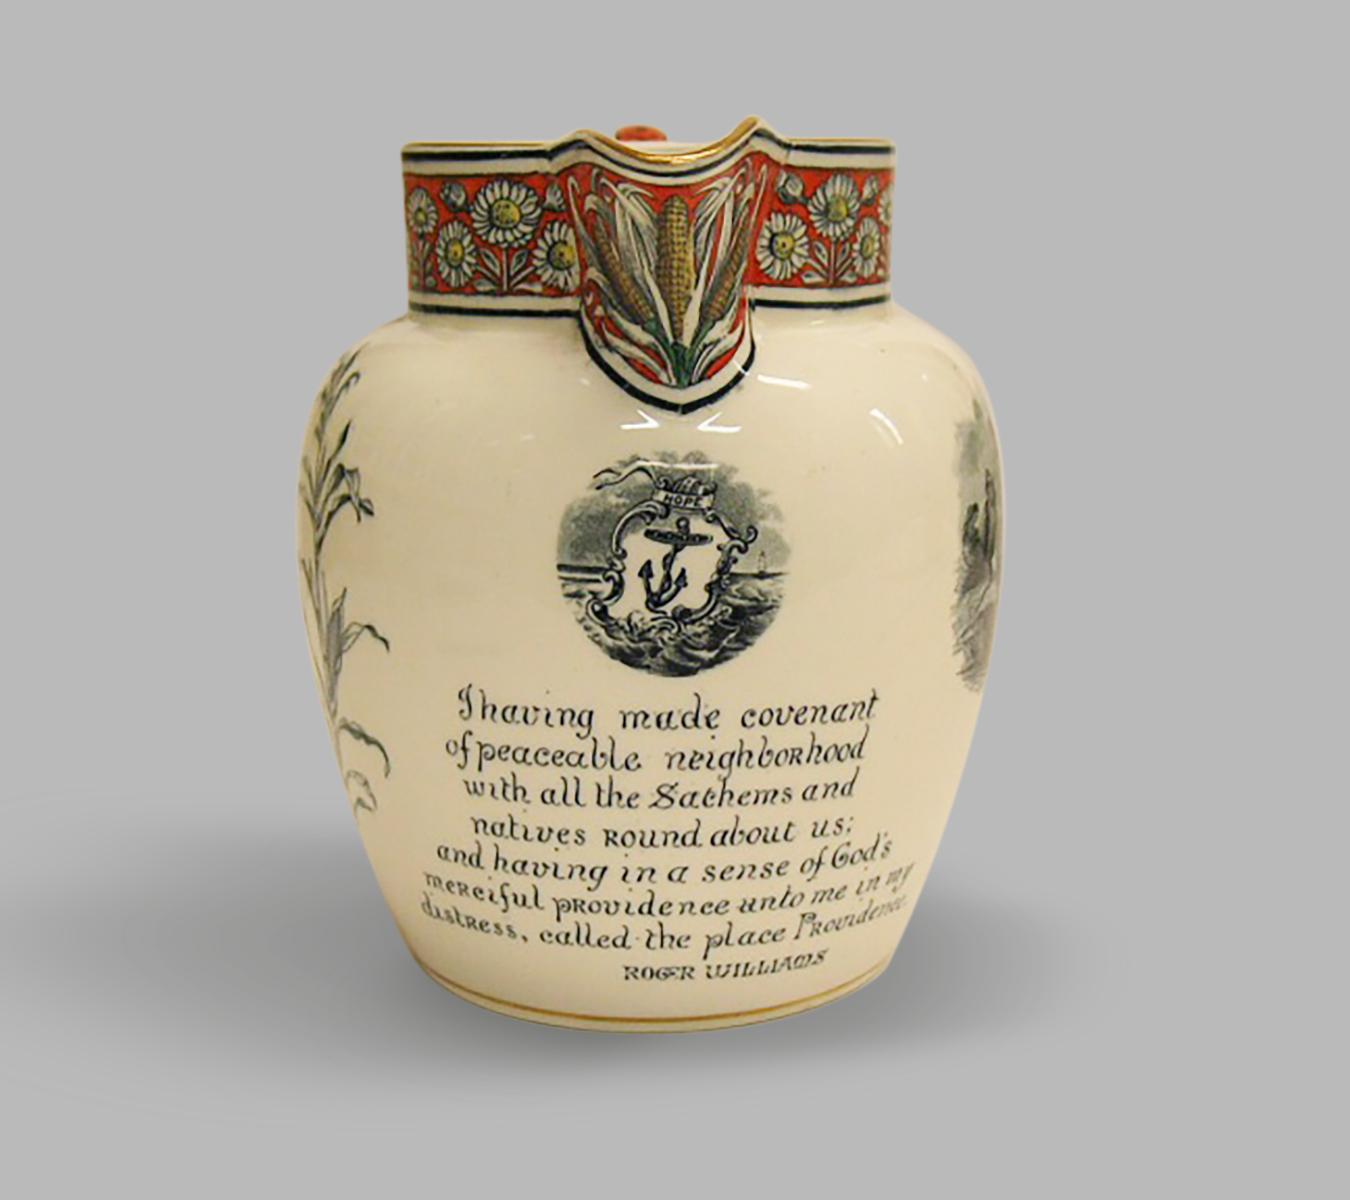 transferware jug with text describing Roger Williams encountering the Narragansett people